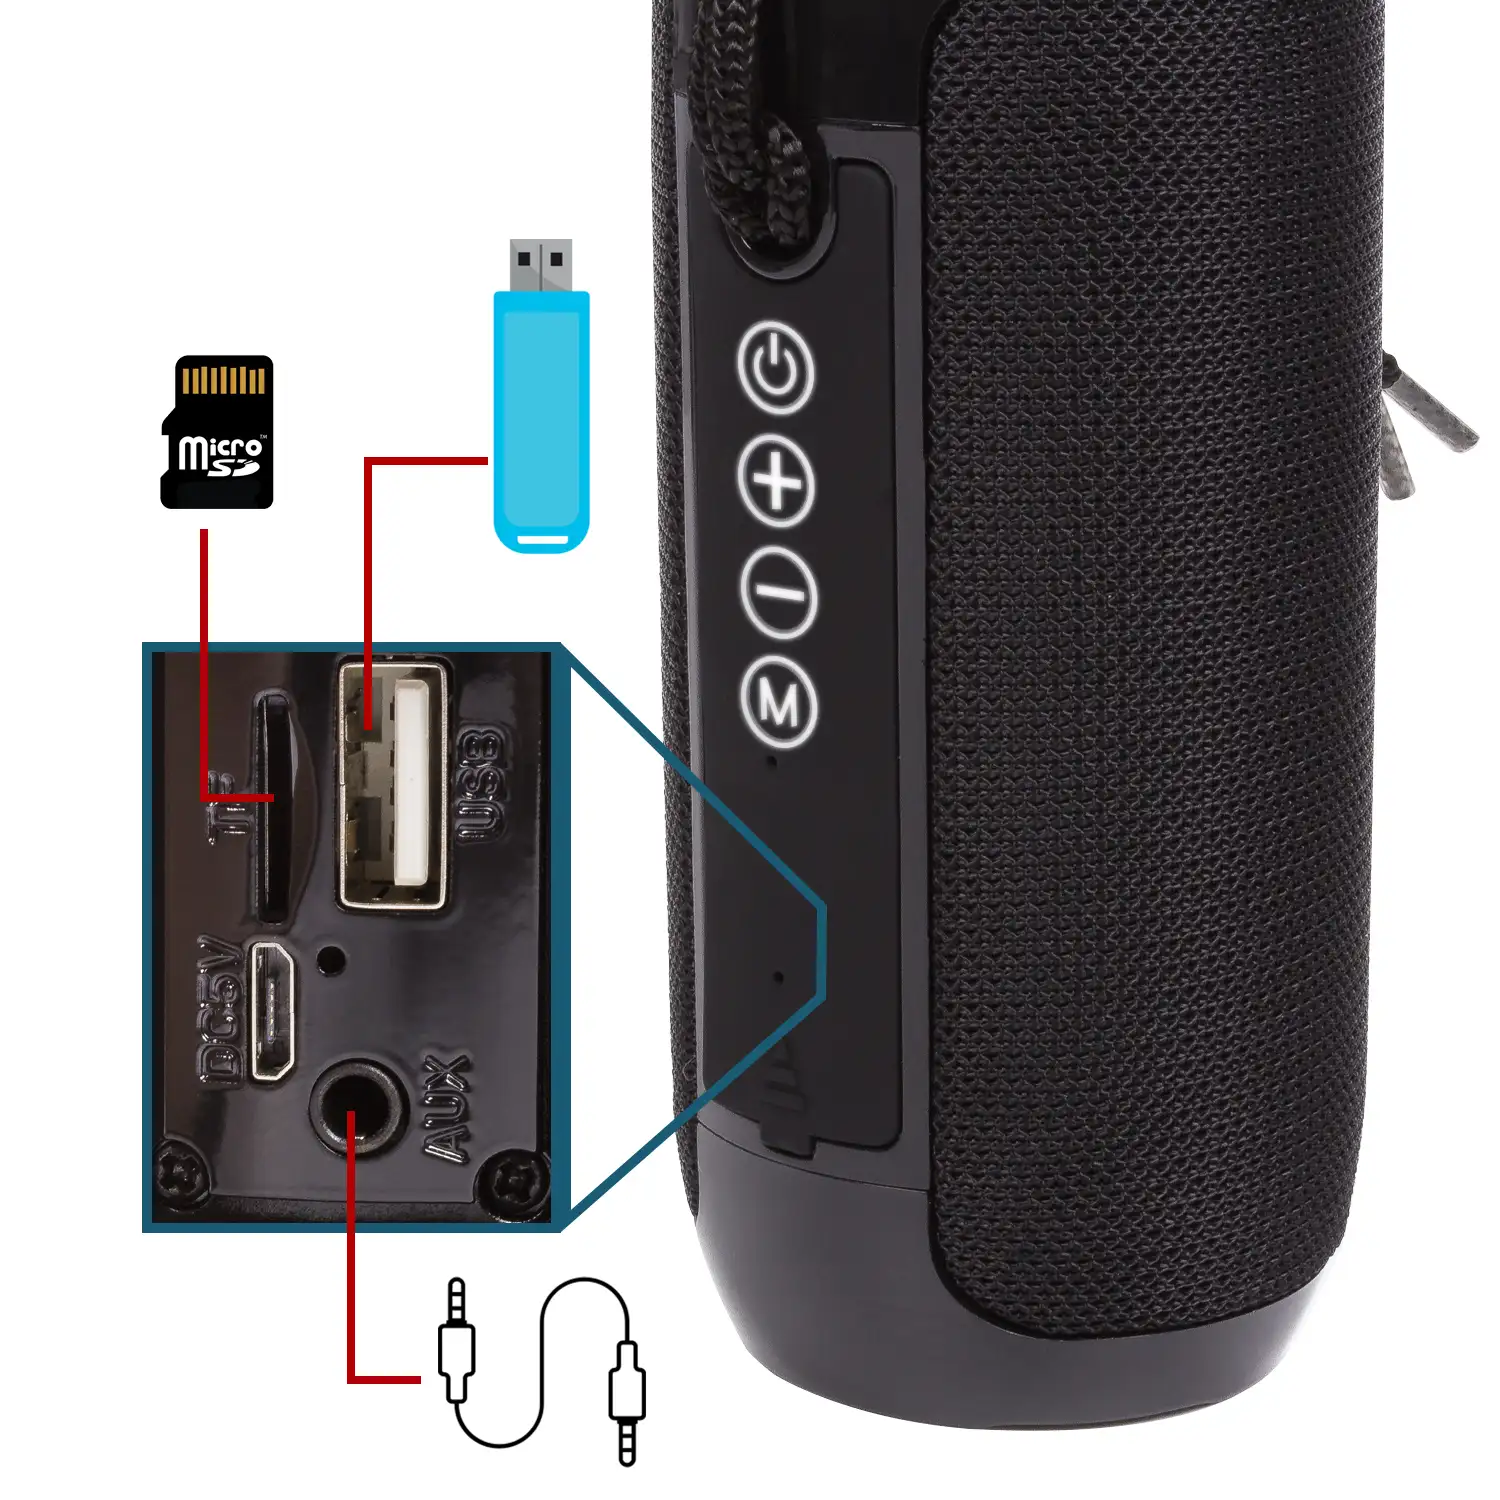 Altavoz portátil Boombox YD-668 Bluetooth 4.2. Entrada USB, tarjeta micro  SD y jack 3.5. Radio FM.